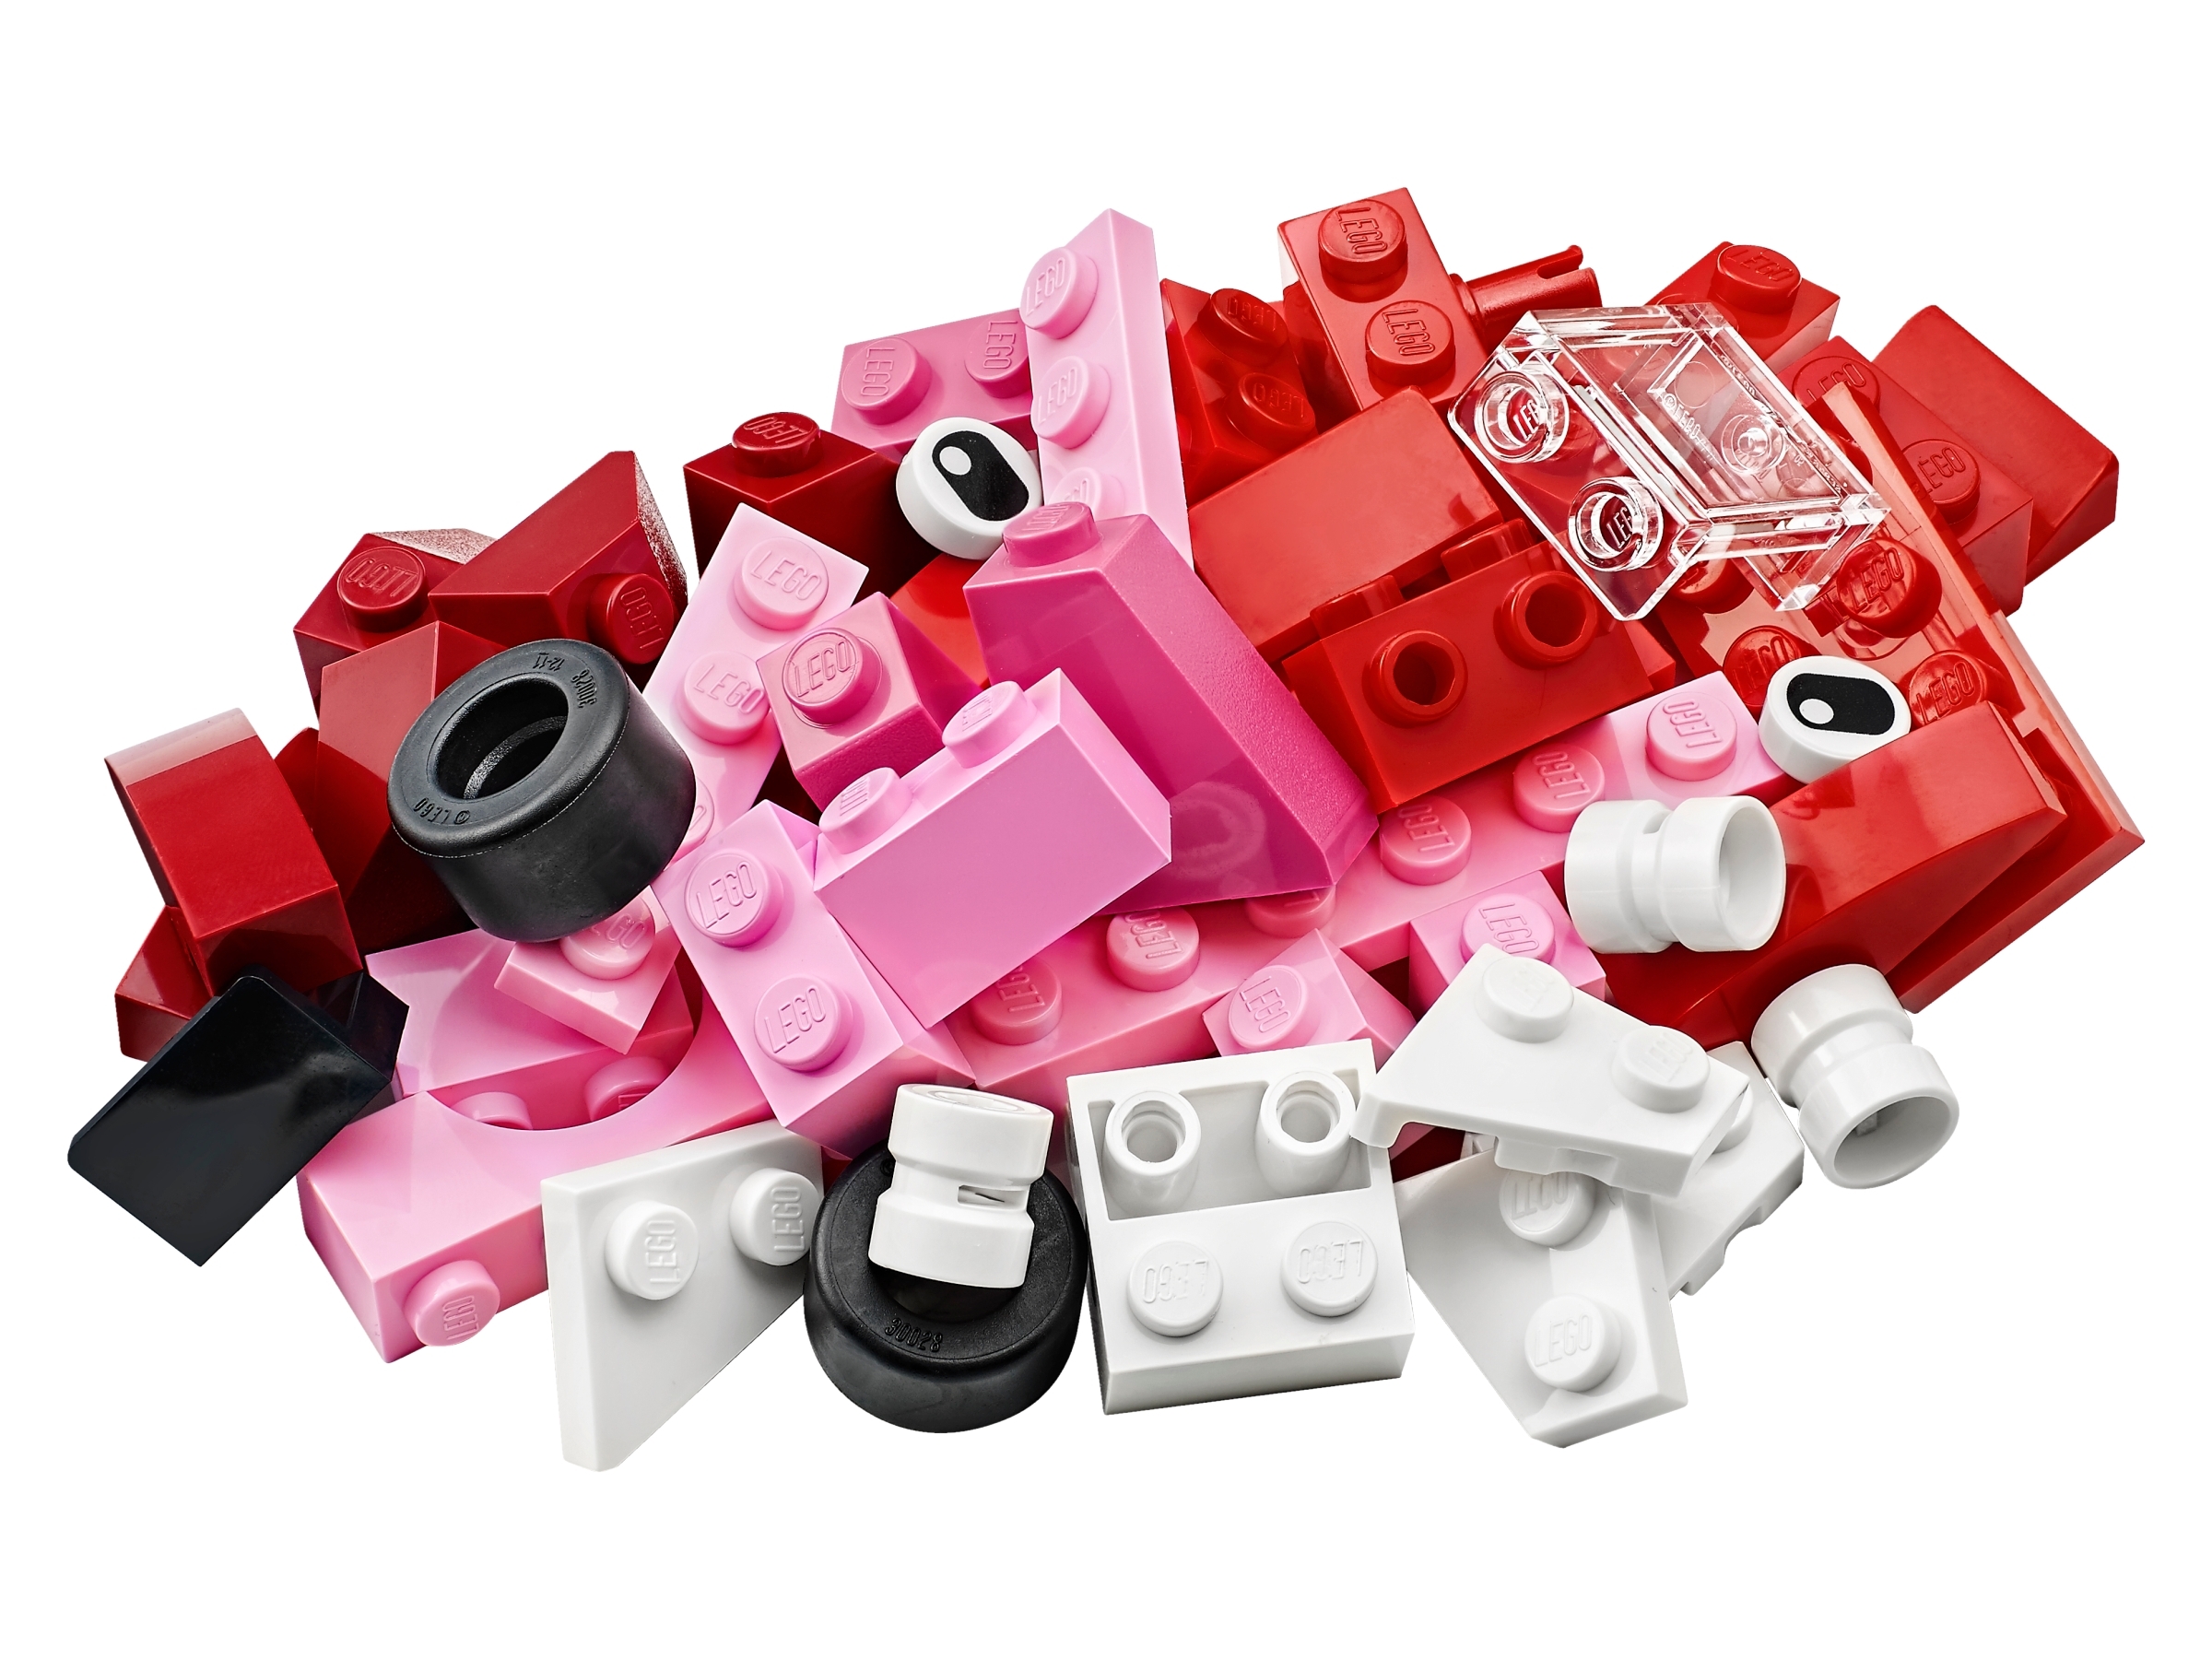 lego classic red creativity box 10707